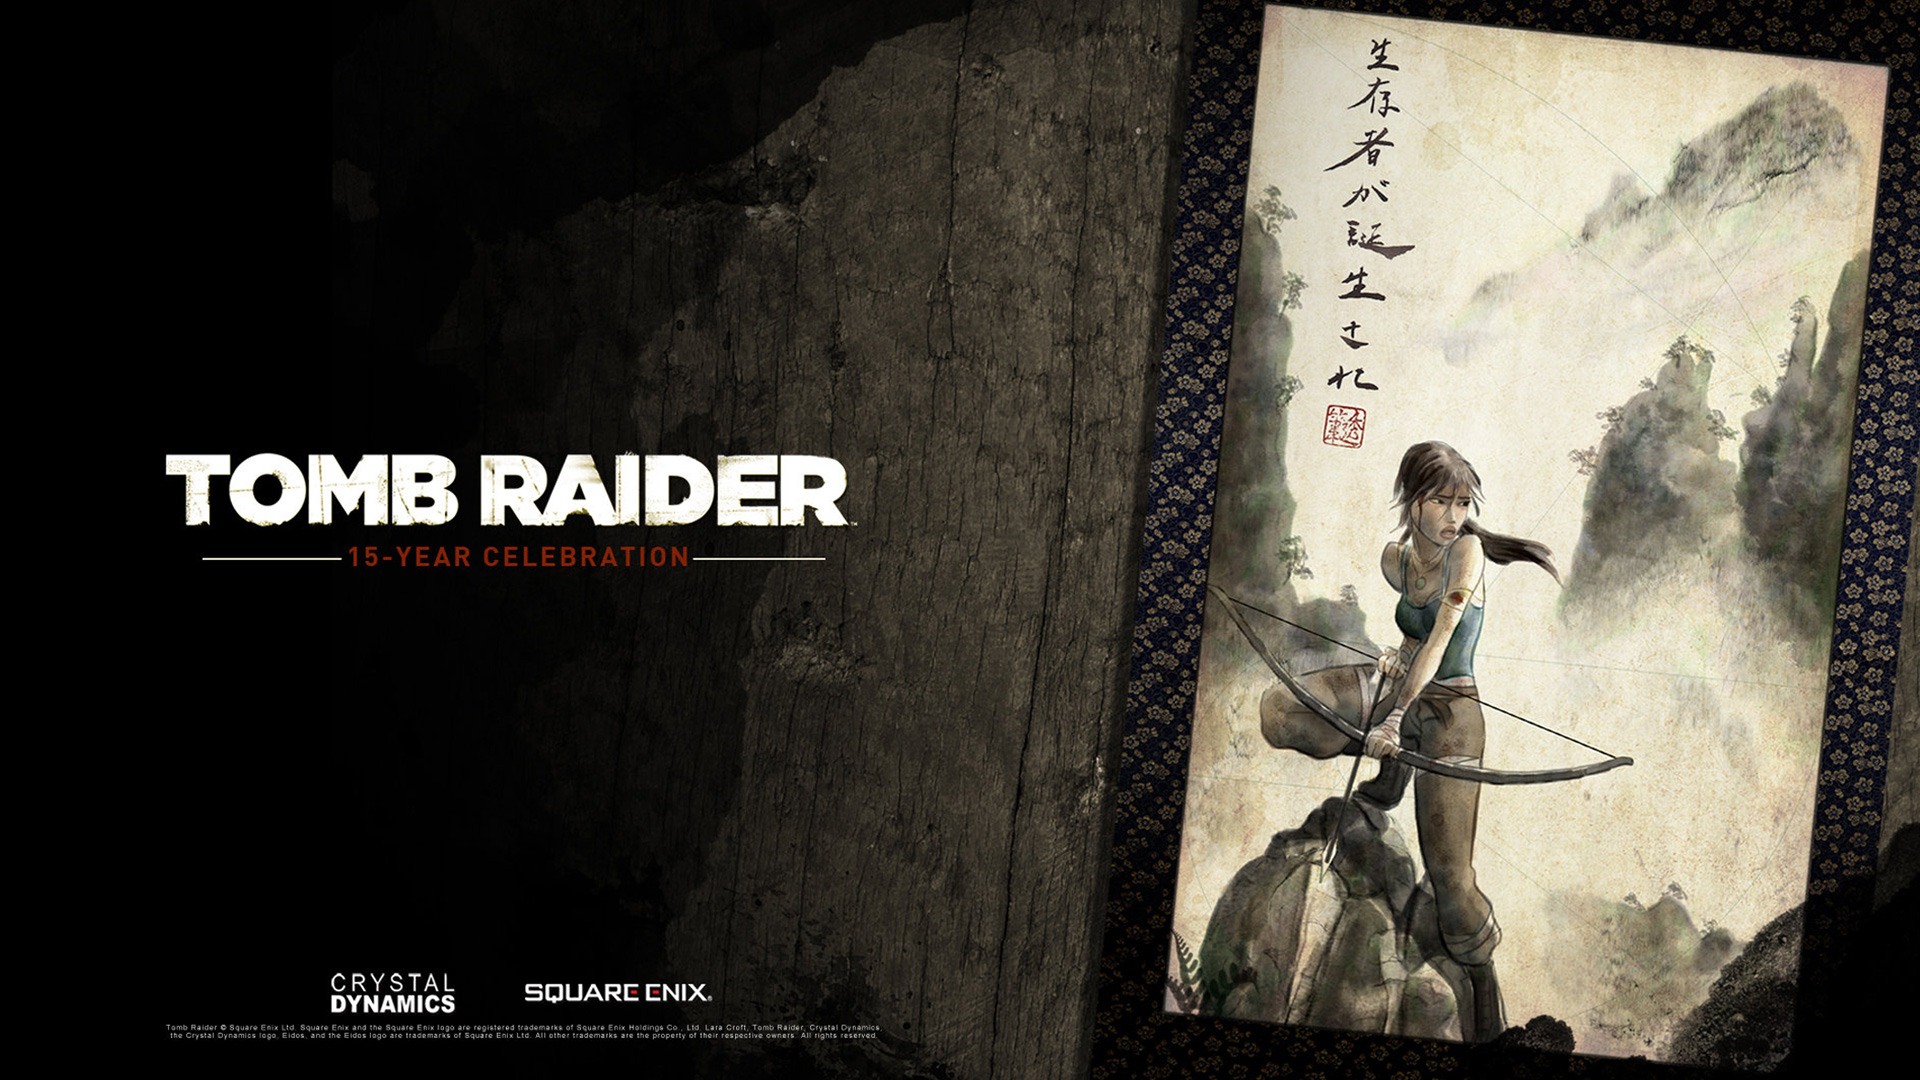 Tomb Raider 15-Year Celebration 古墓麗影15週年紀念版高清壁紙 #14 - 1920x1080